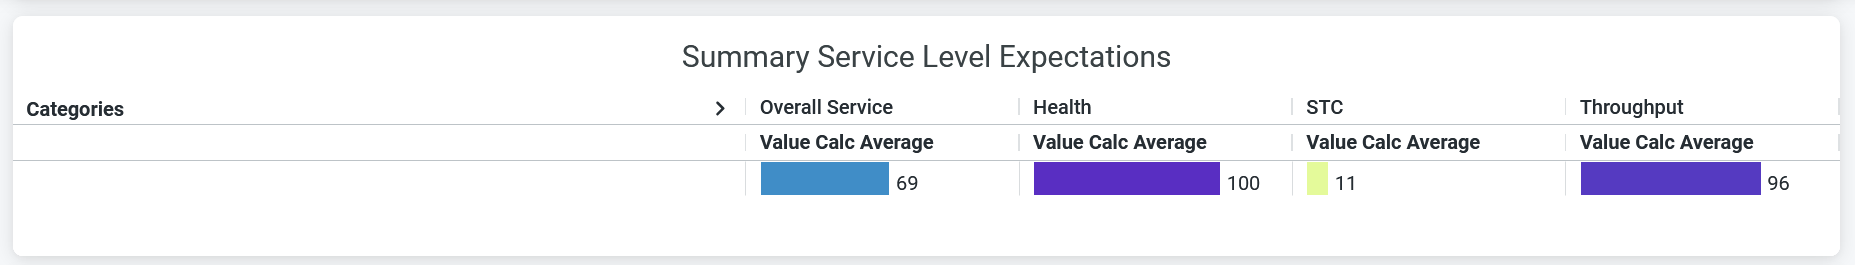 Summary Service Level Expectations